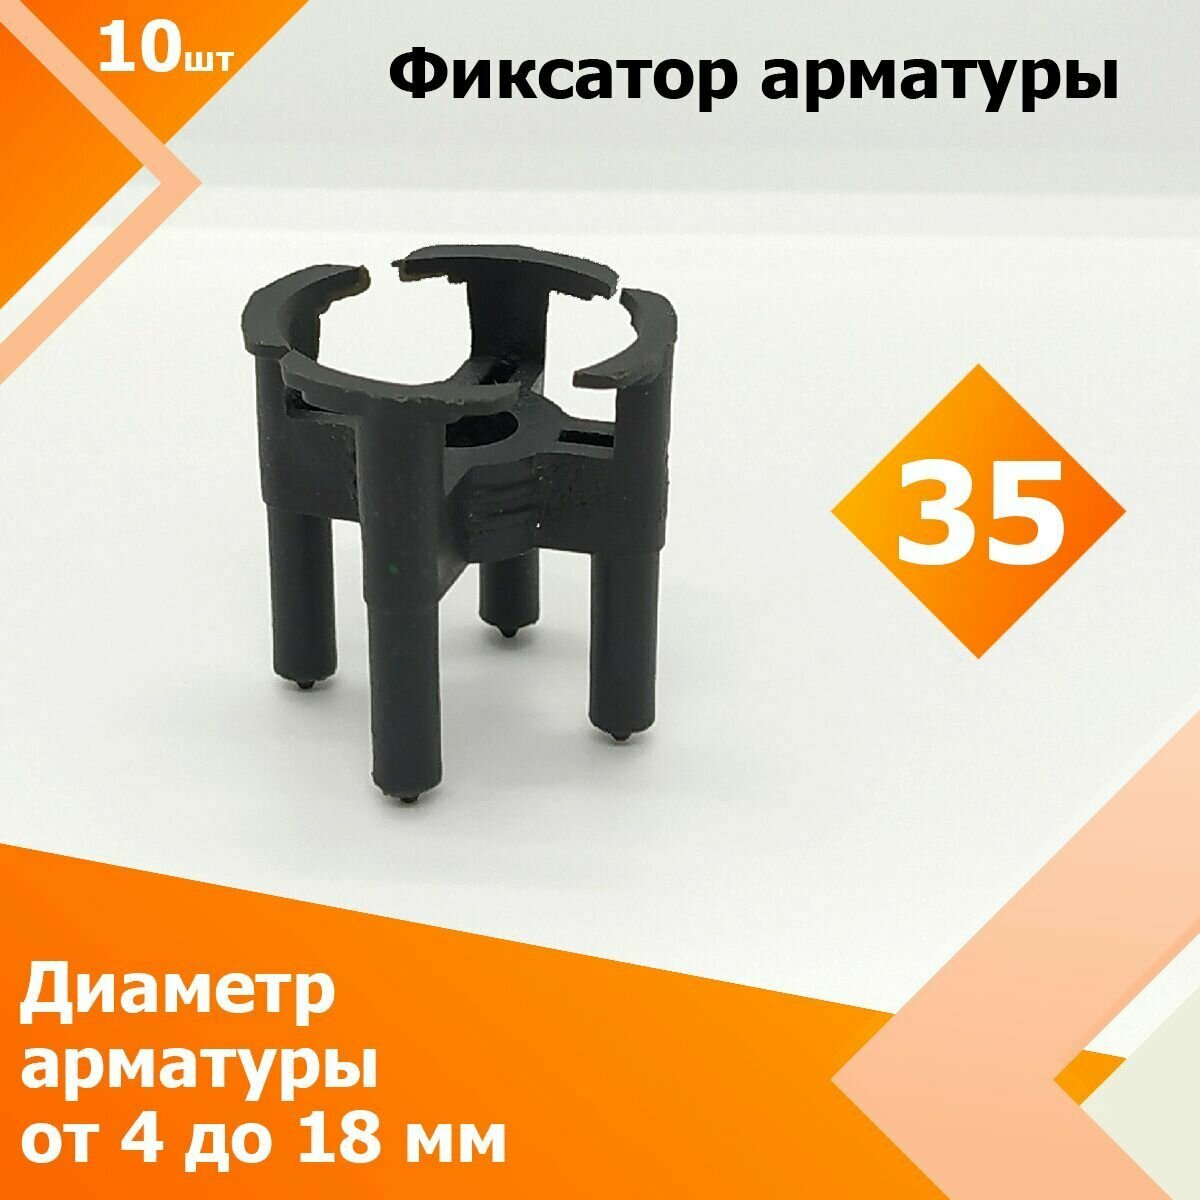 Фиксатор арматуры "Стульчик" 35 мм (10 шт.) (Диаметр арматуры от 4 до 18 мм)